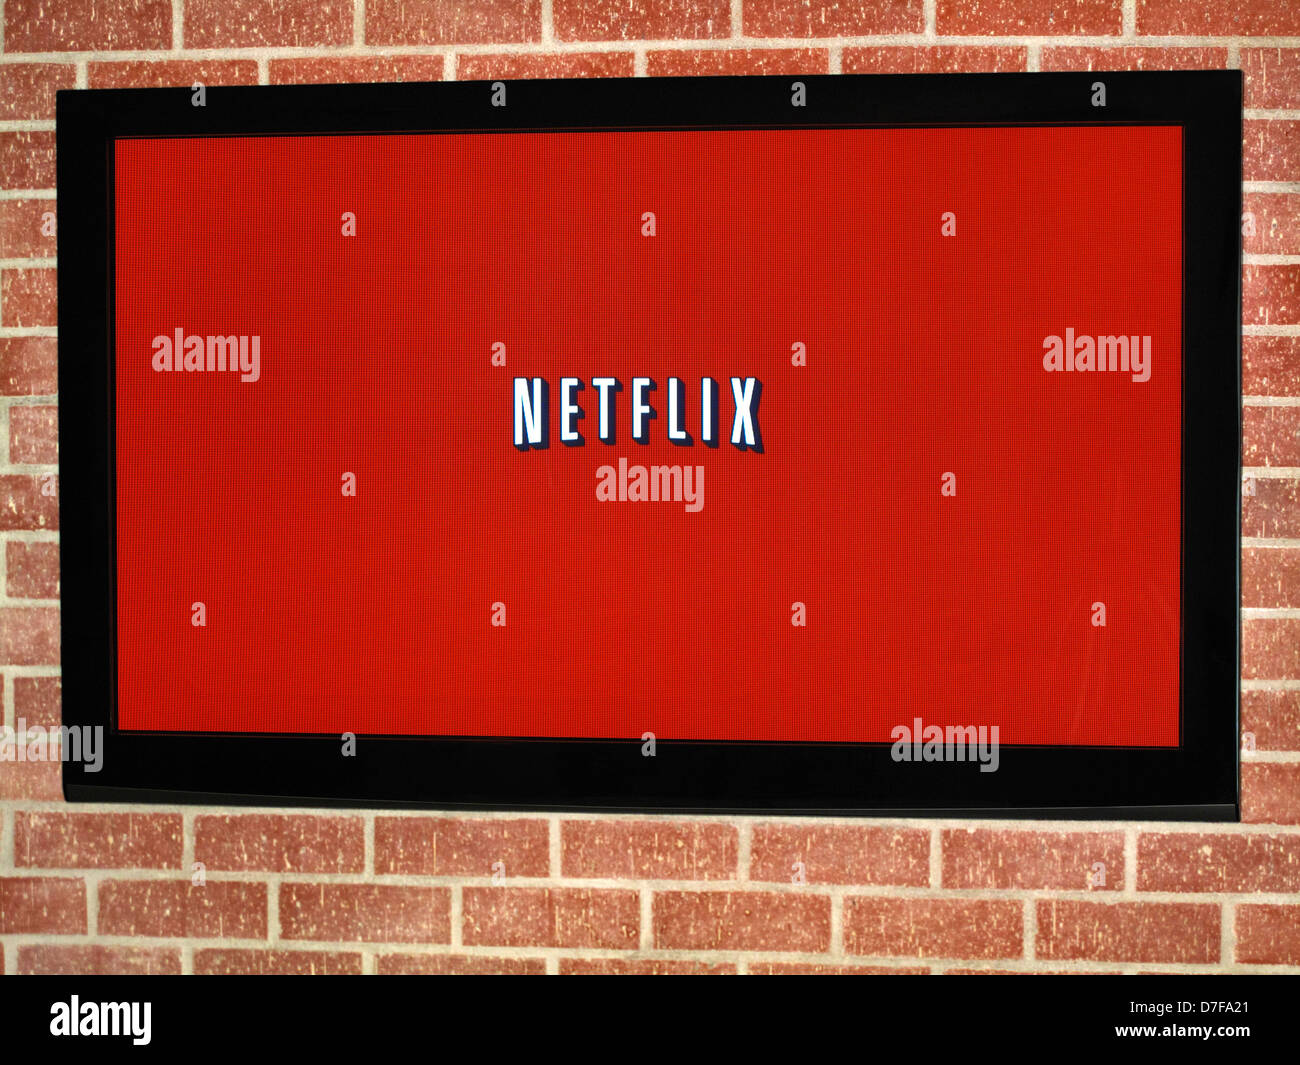 Netflix screen on plasma tv Stock Photo